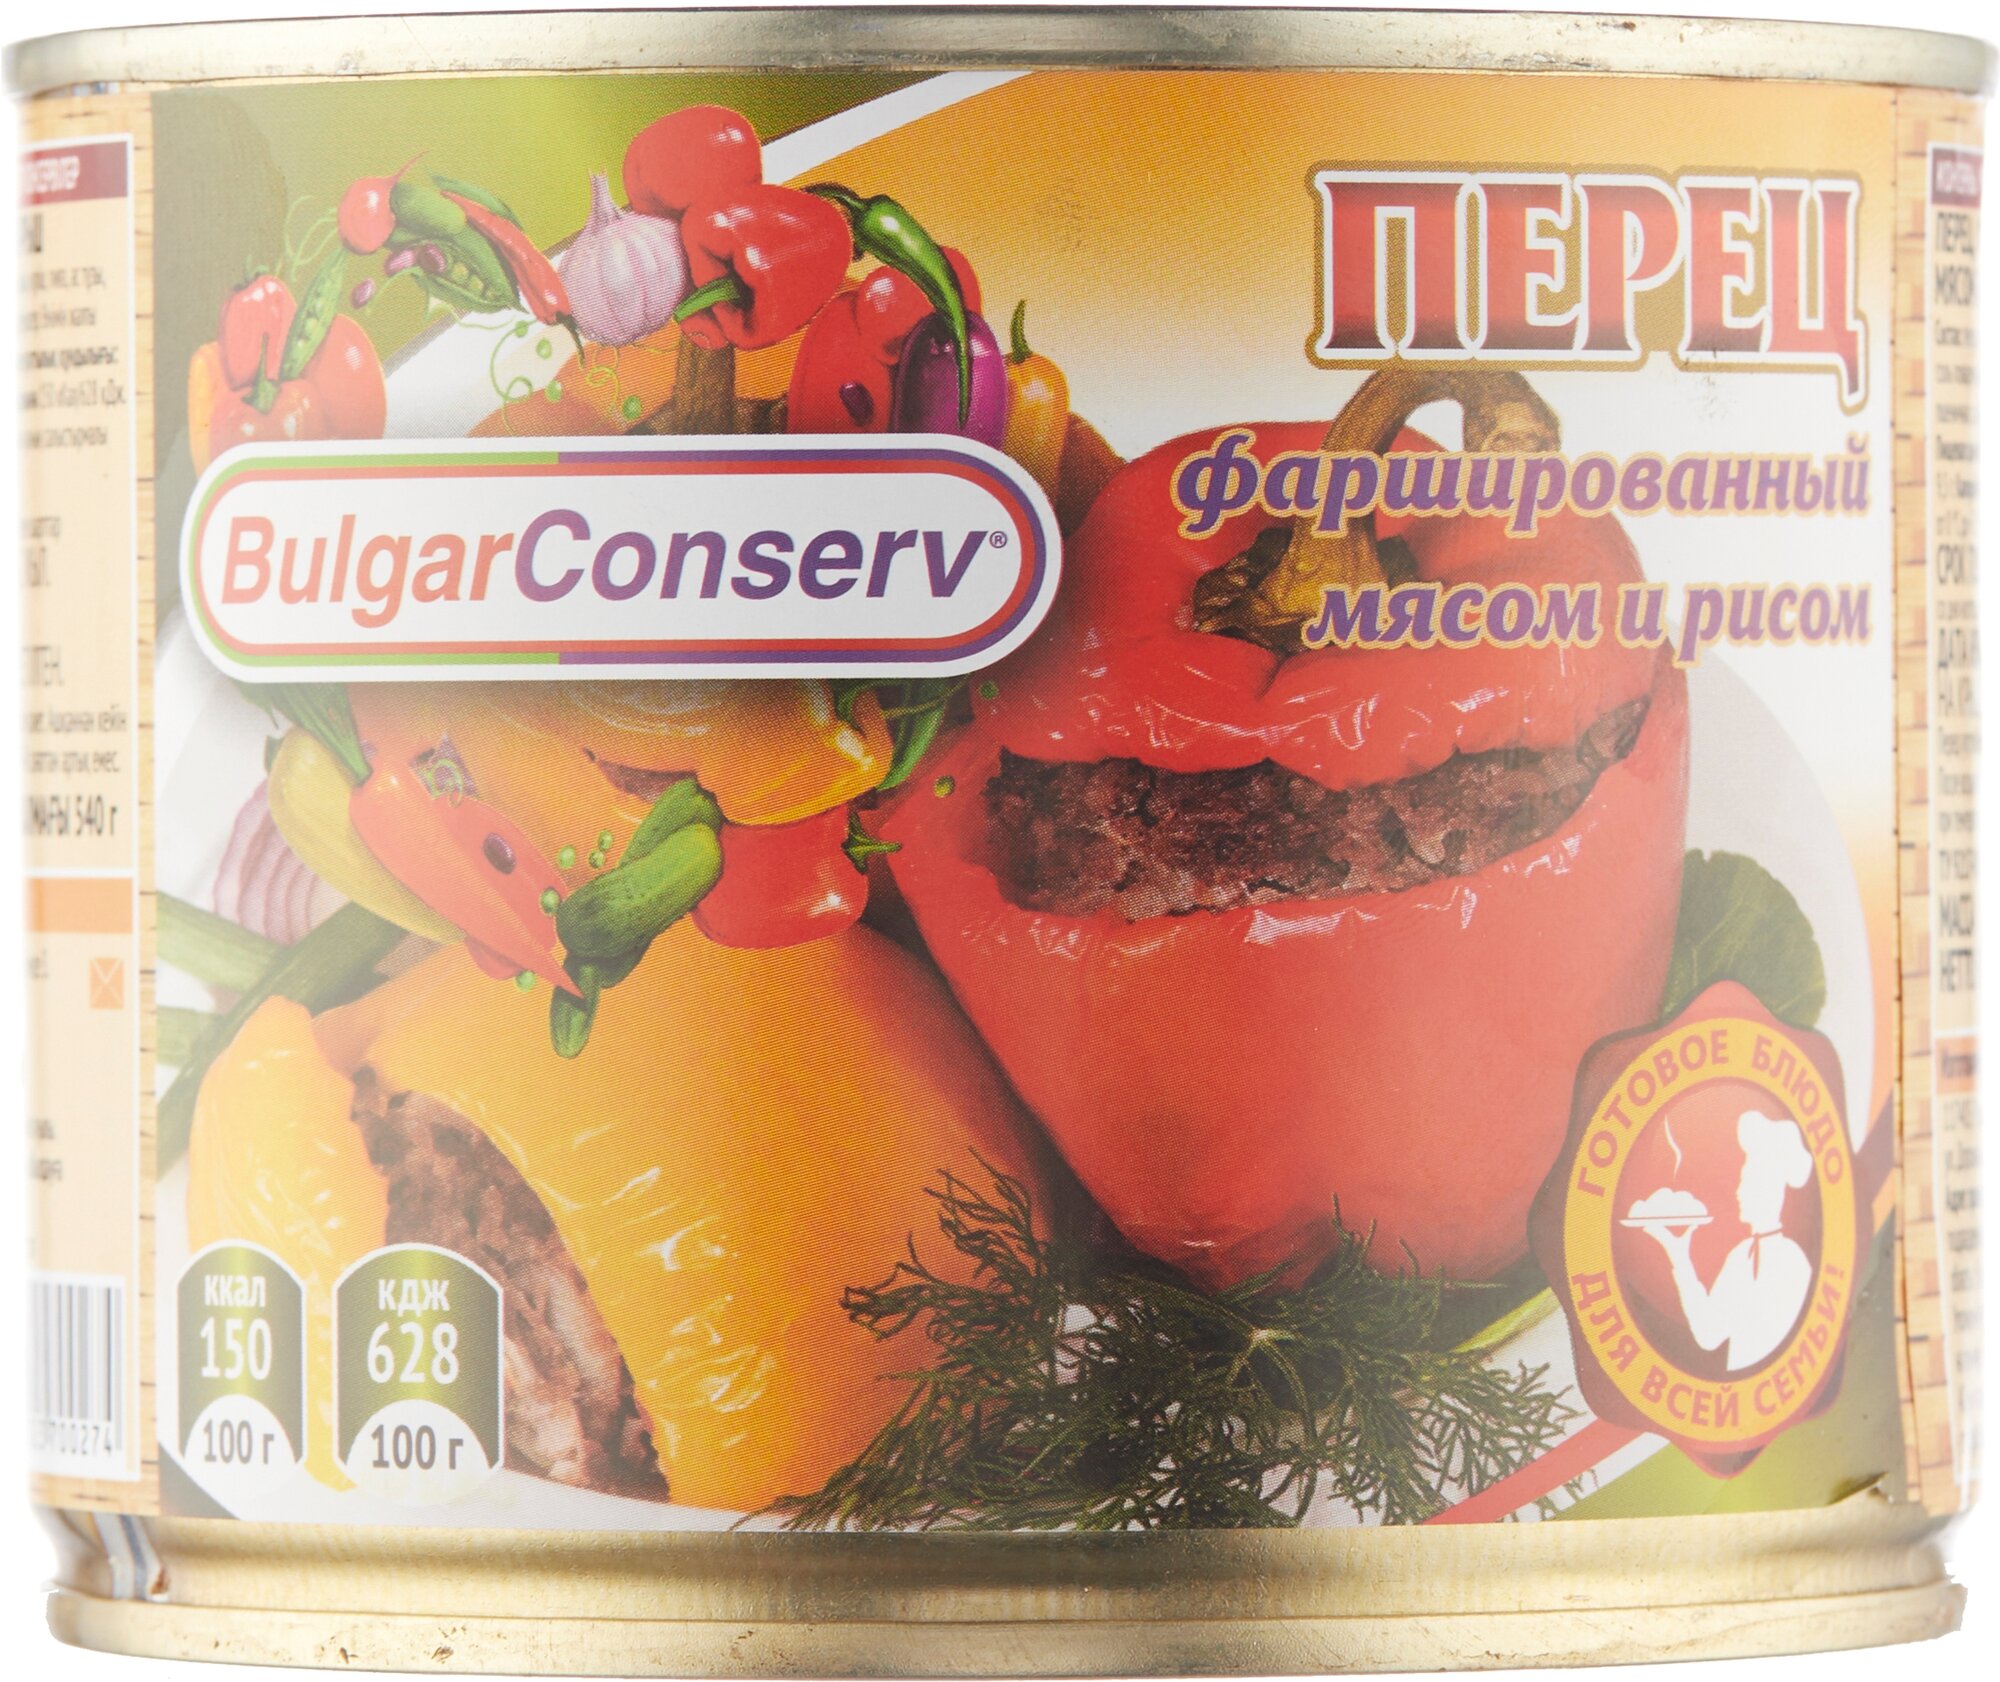 Перец Булгарконсерв с мясом и рисом 540г (1шт.)